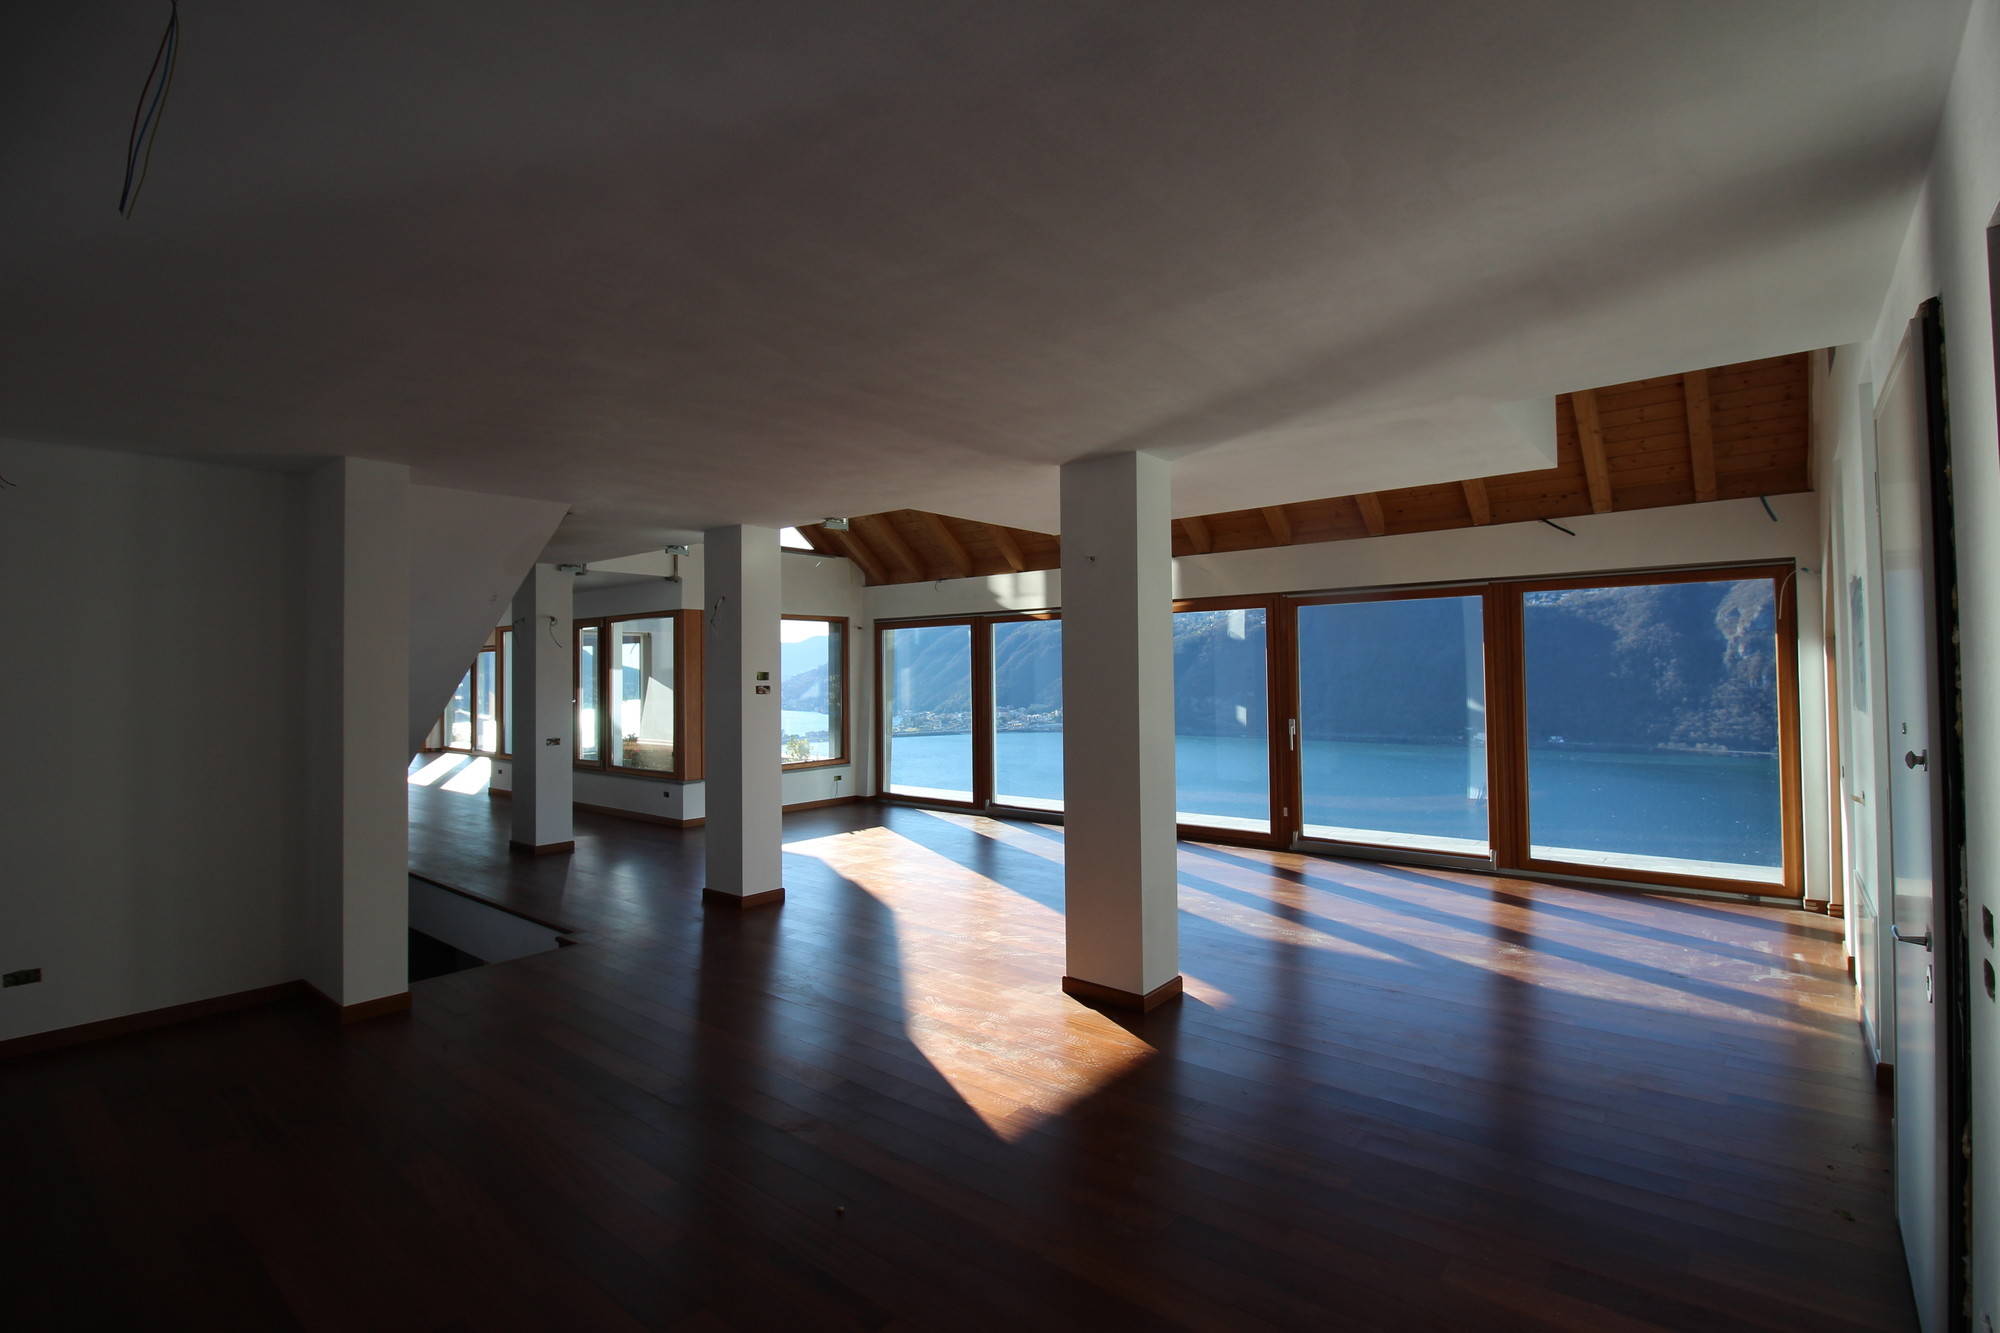 Villa Piazzora -Spectacular view of Lake Lugano